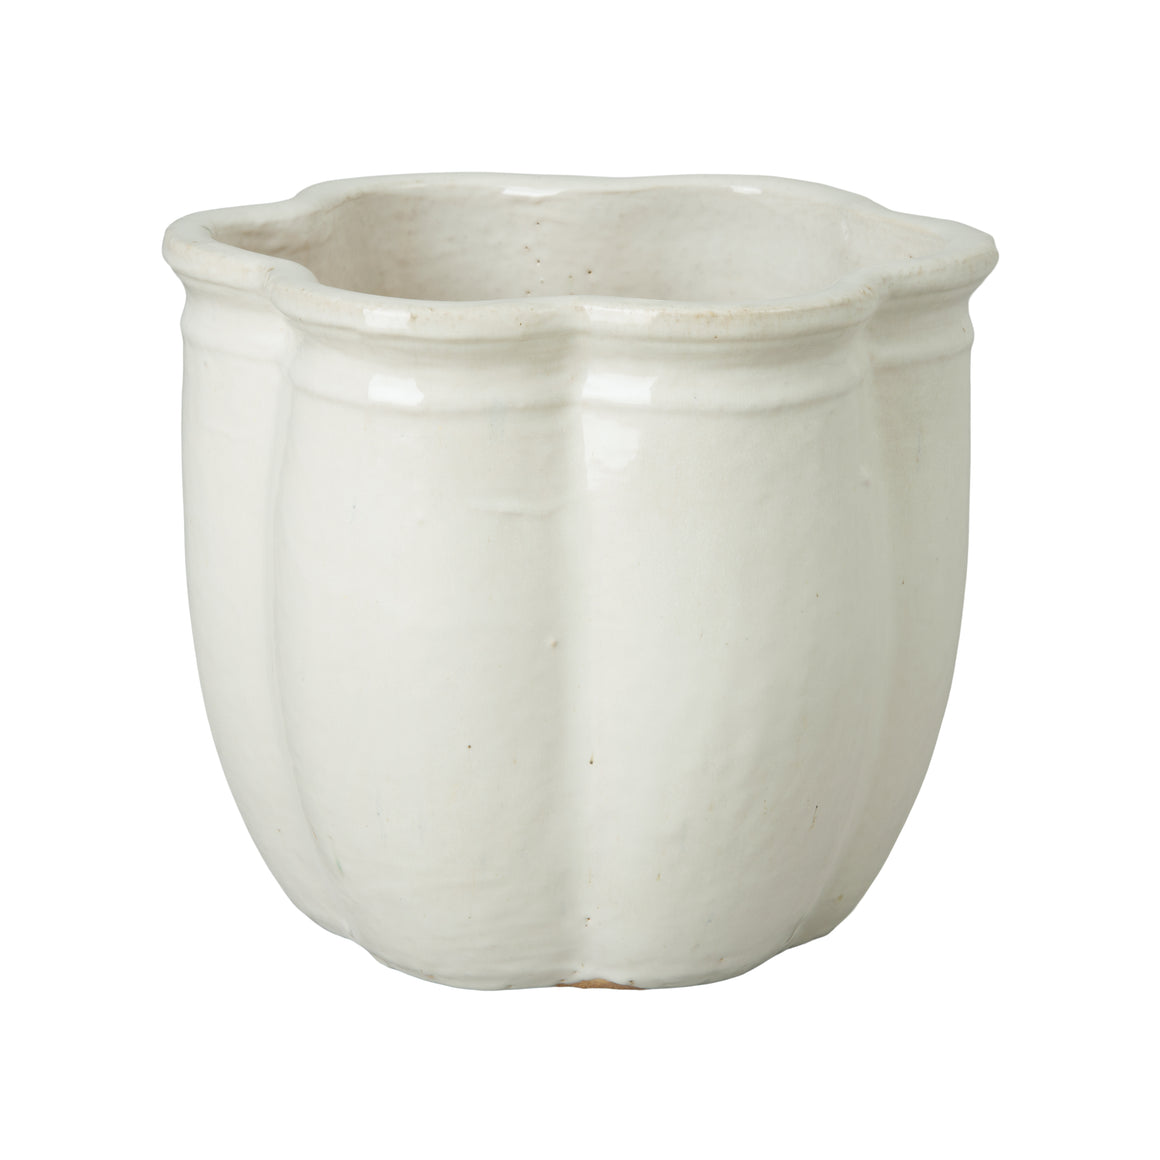 Scalloped White Ceramic Planter - Medium